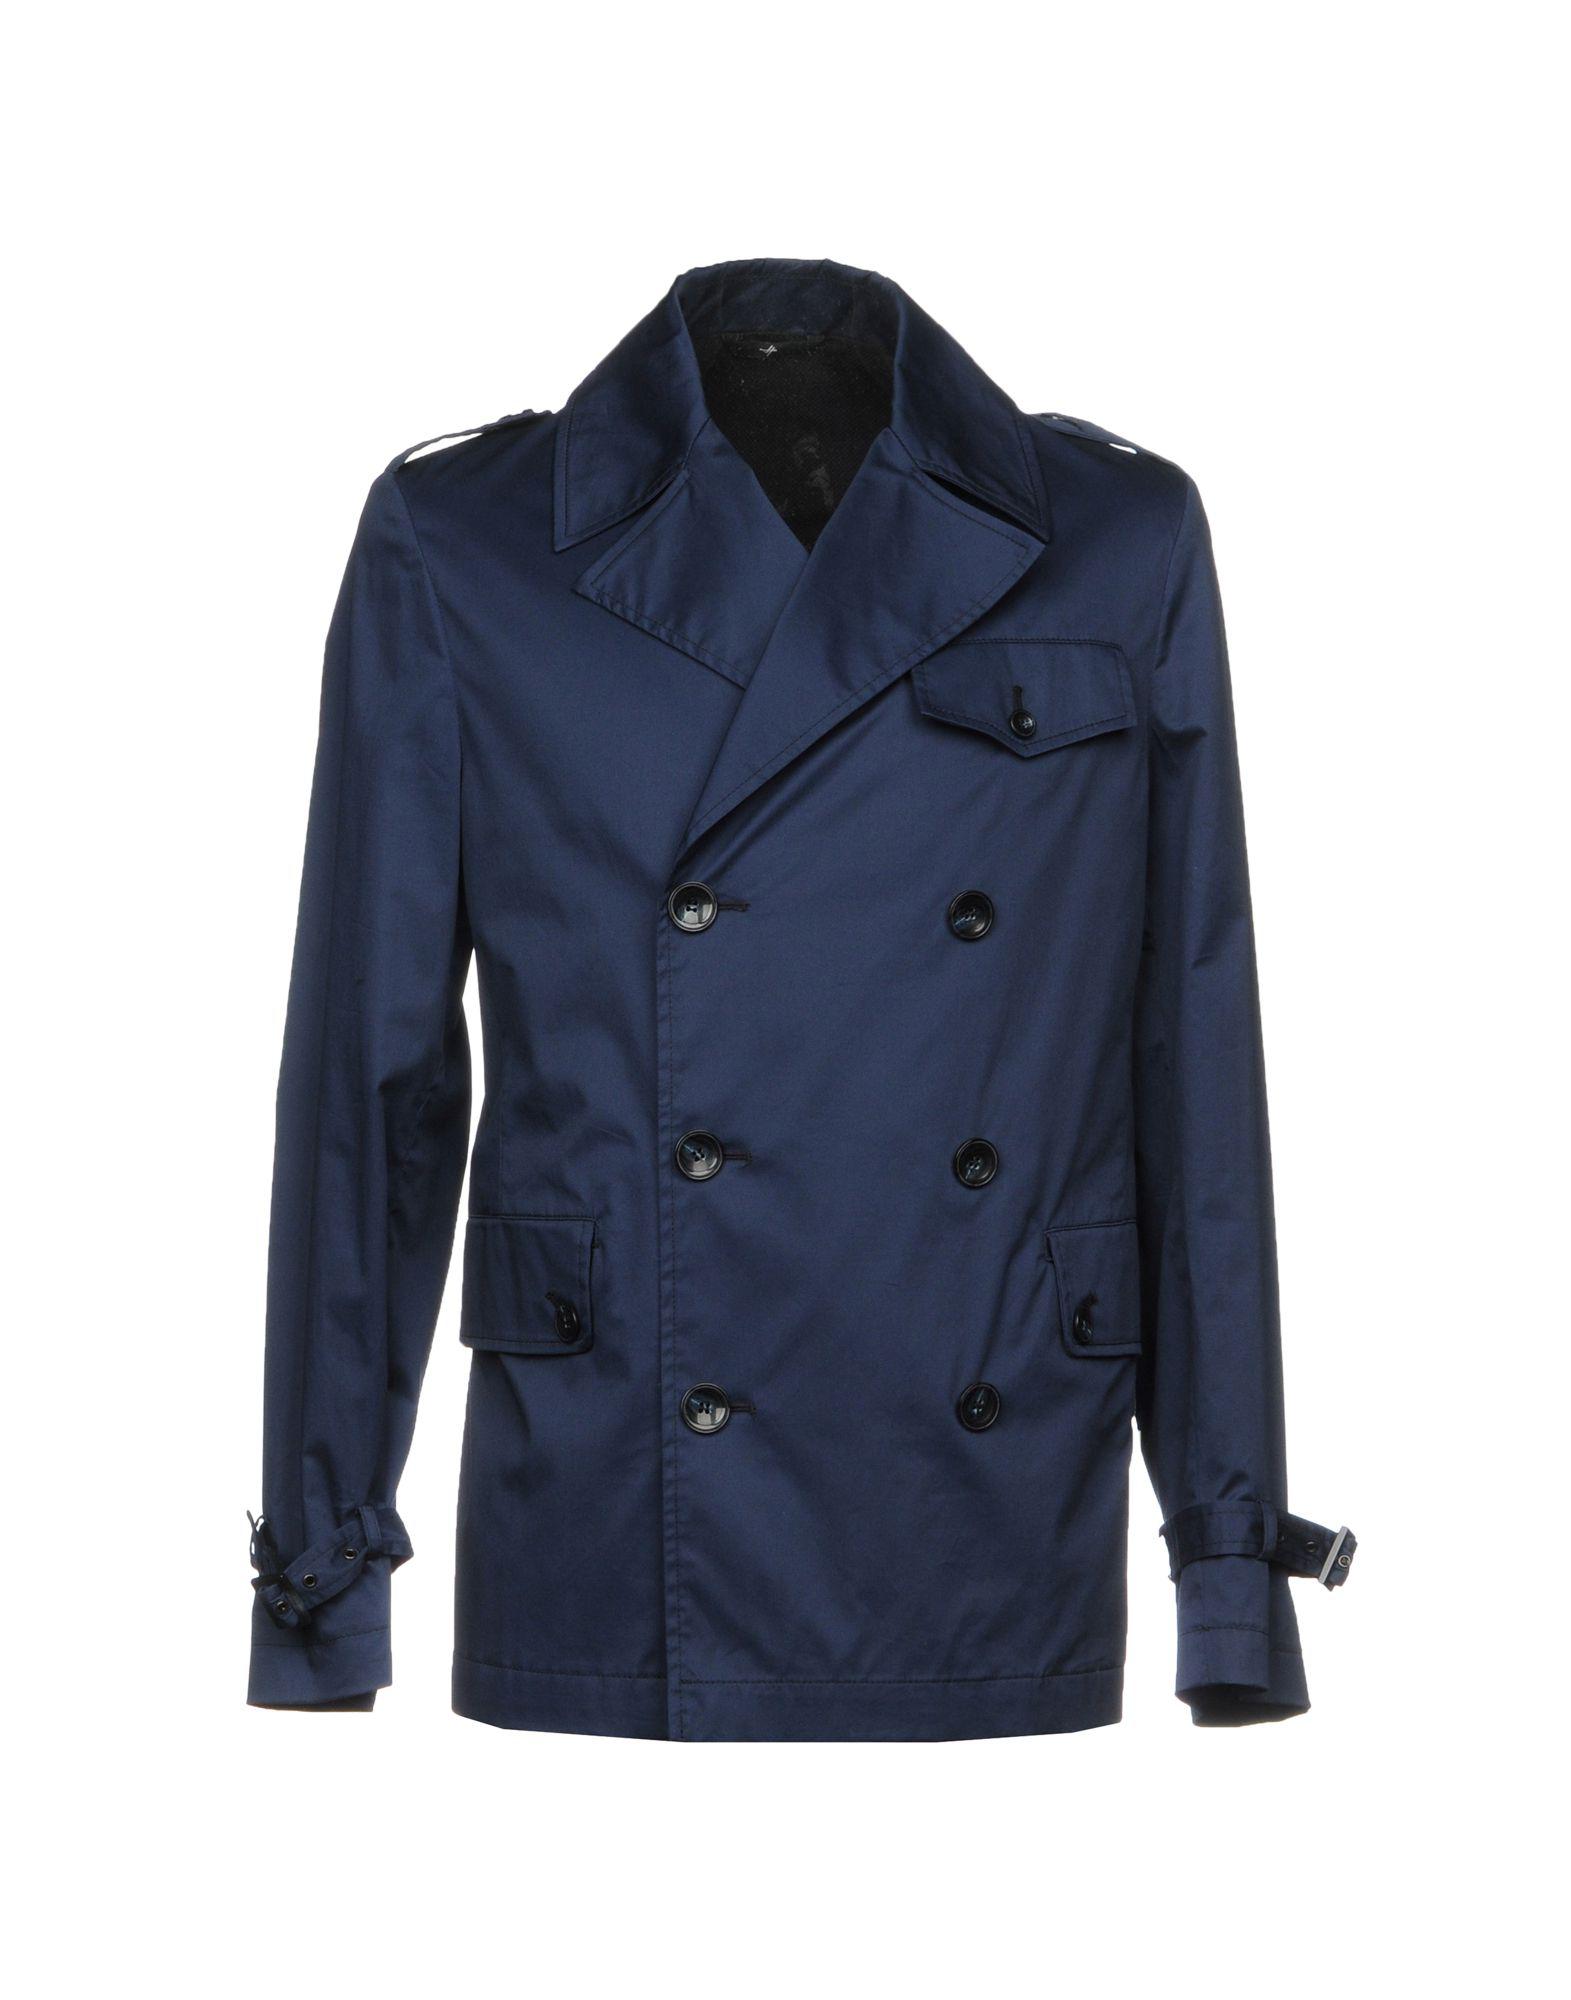 Hevò Cotton Overcoat in Blue for Men - Lyst